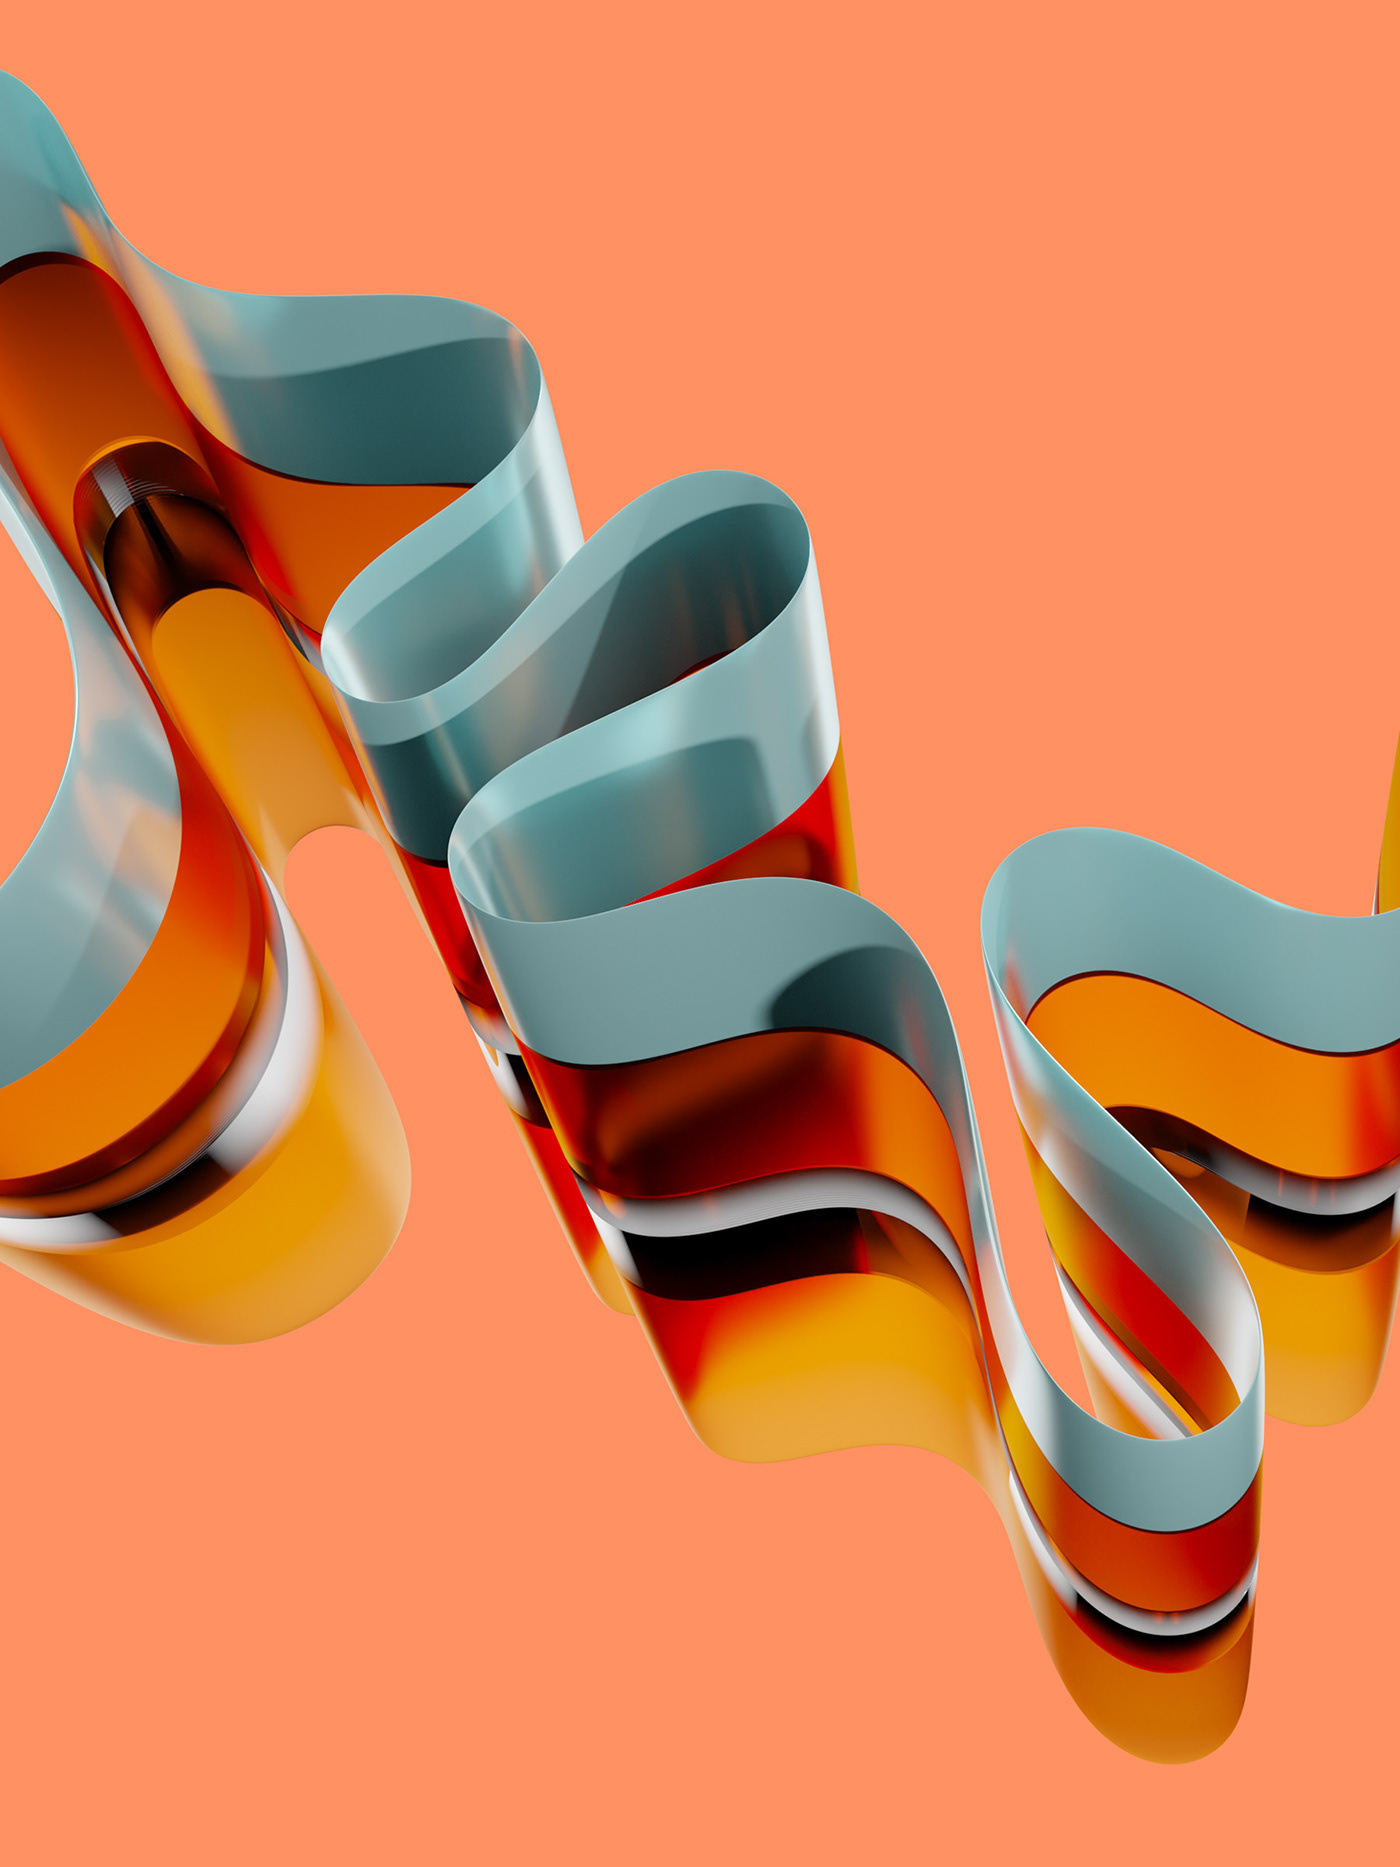 abstract Digital Art  concept design 3D wallpaper blender Render CGI modern